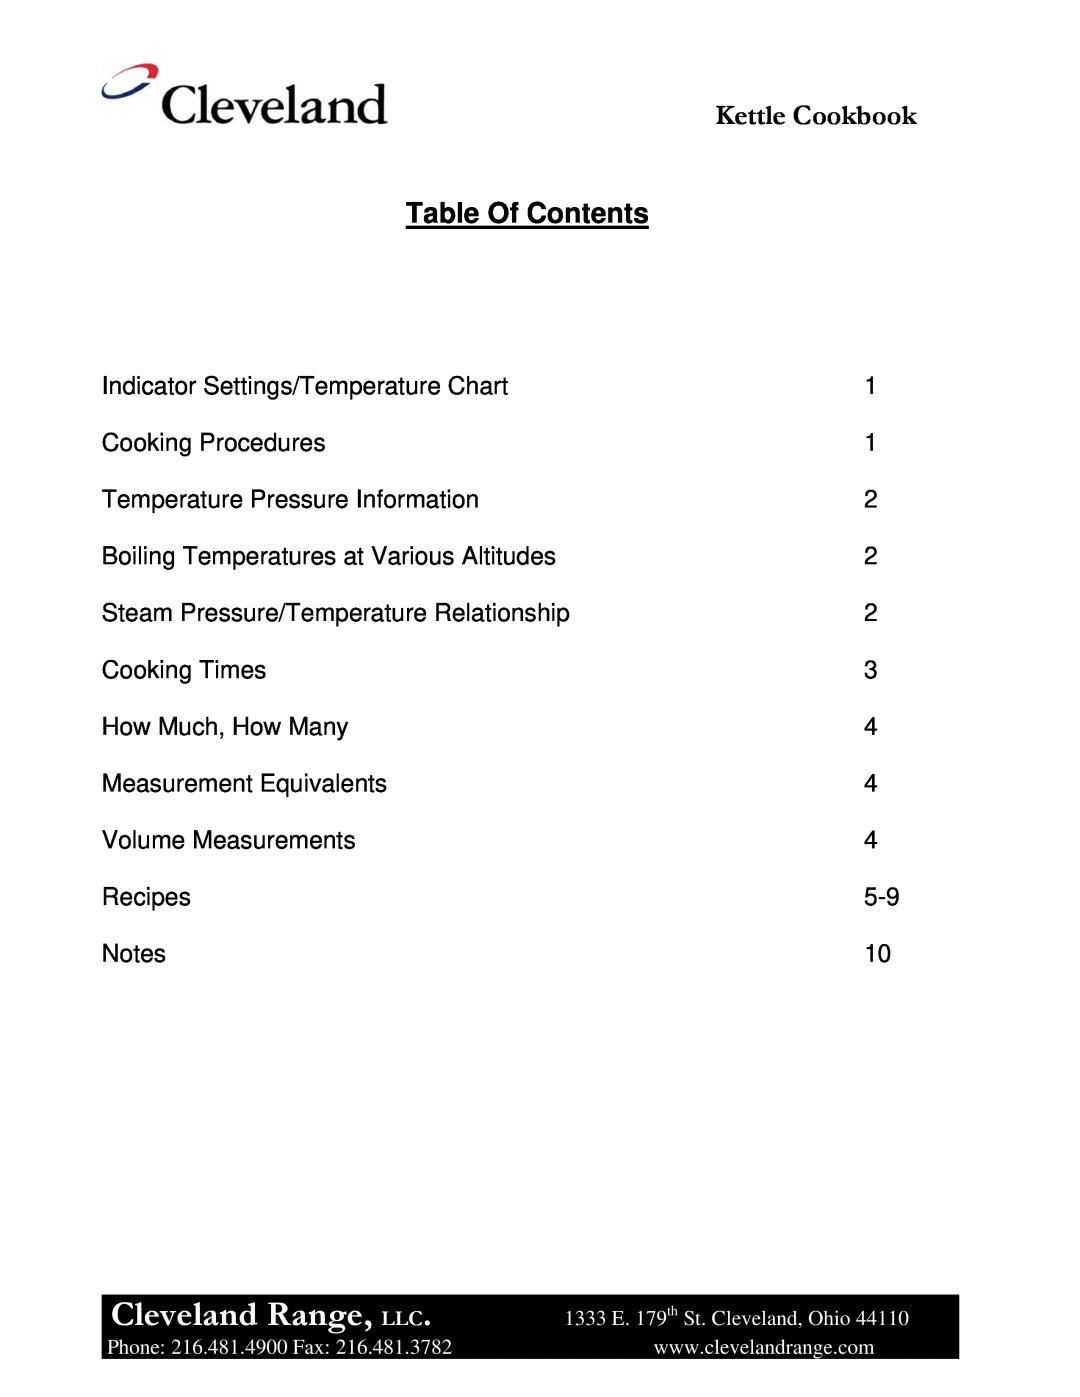 Cleveland Range Steam Jacketed Kettle manual Cleveland Range, LLC, Kettle Cookbook, Table Of Contents 